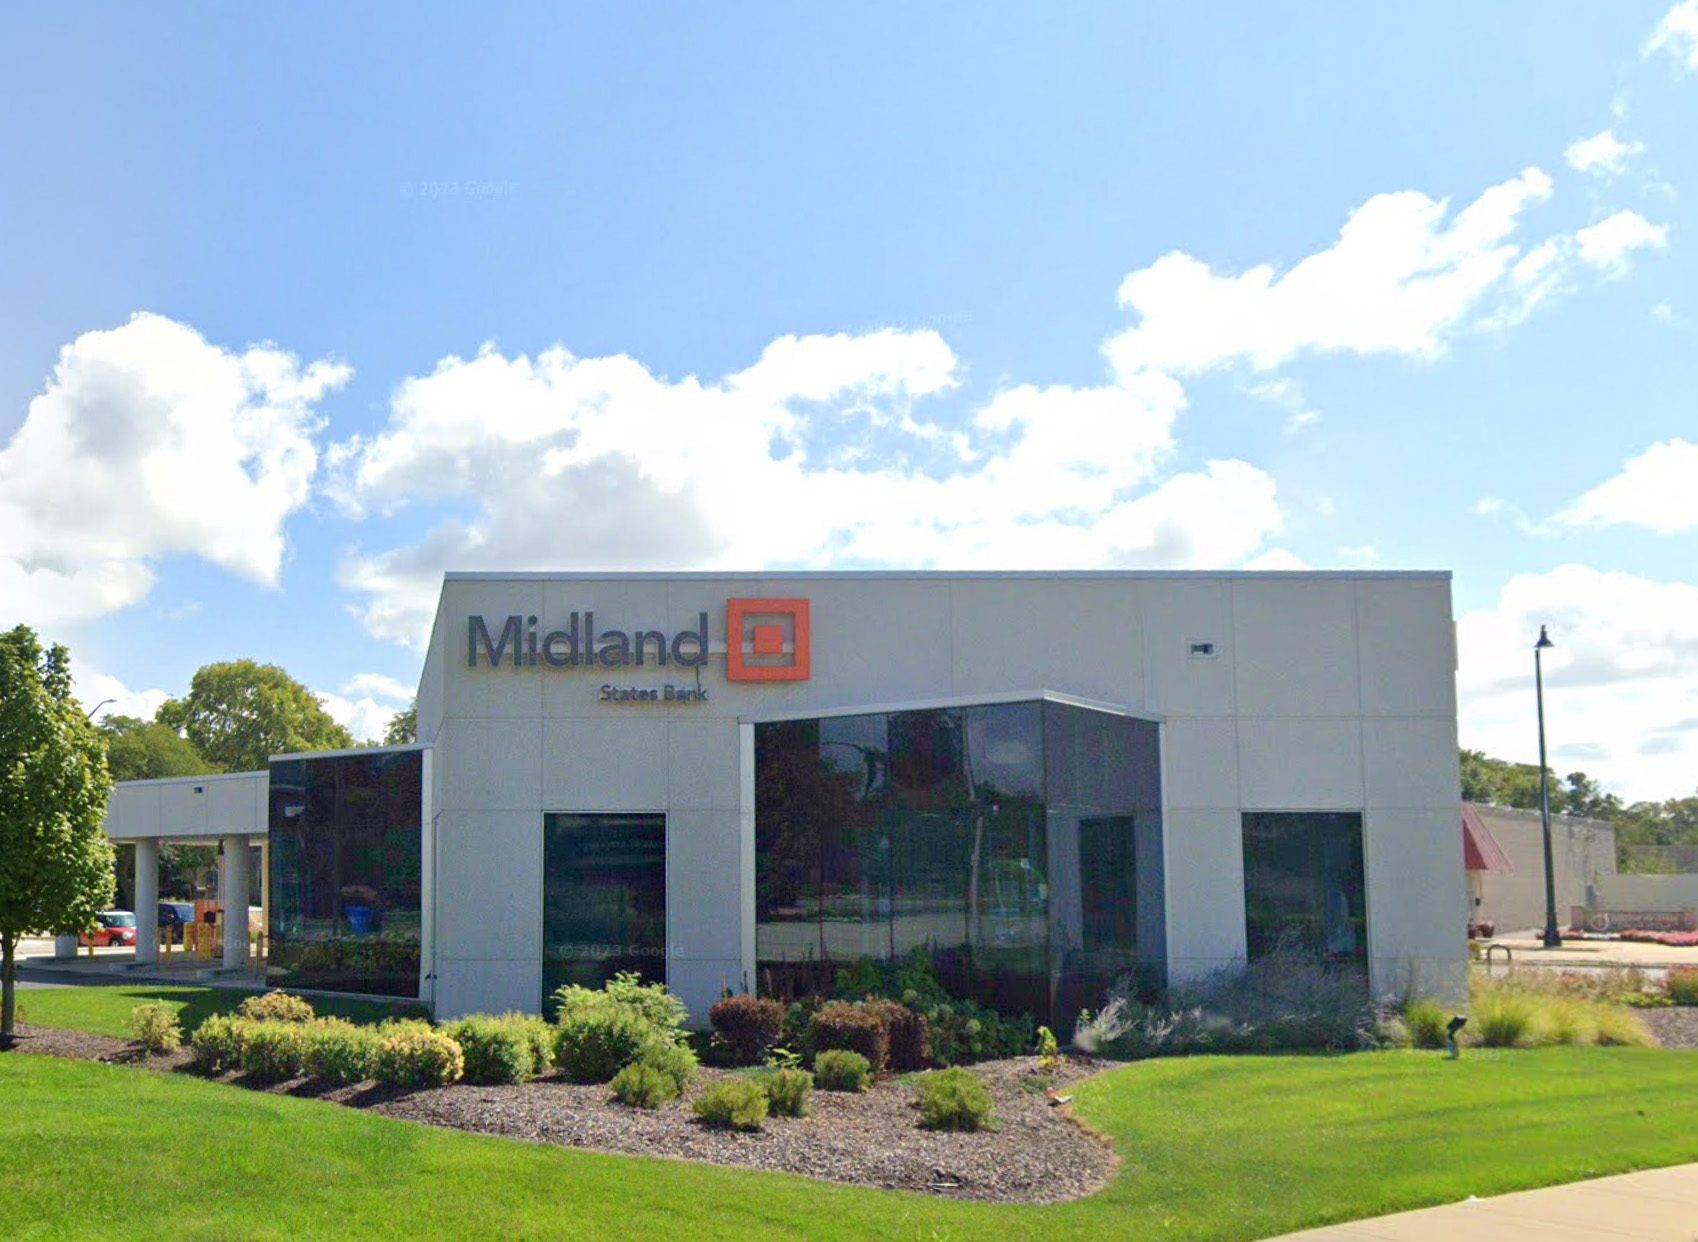 Midland States Bank 